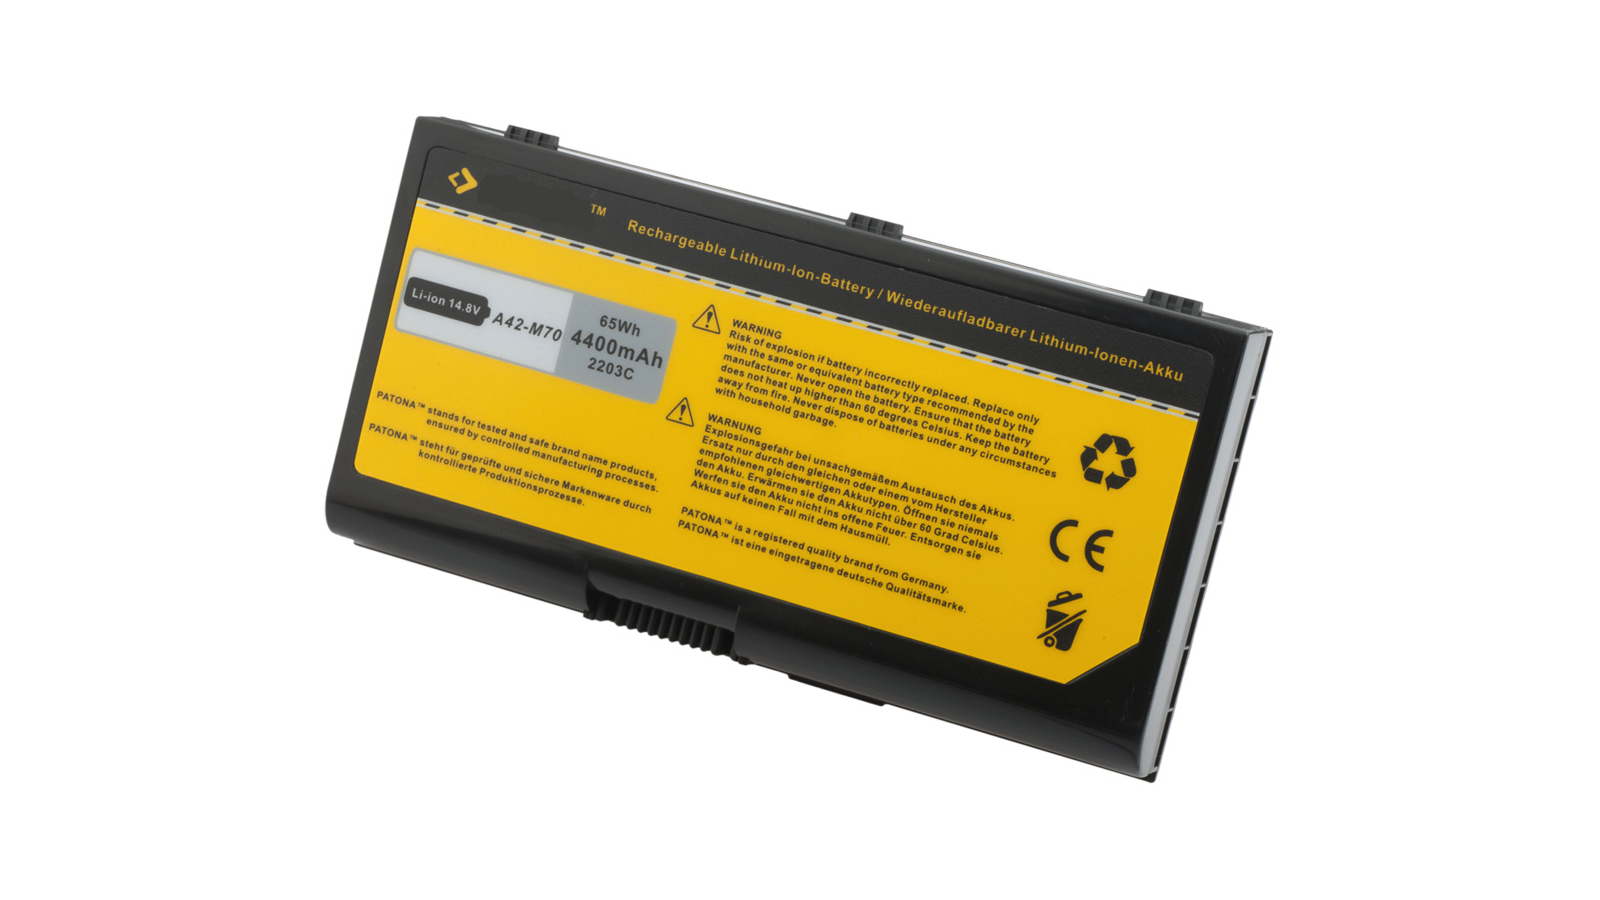 Batteria compatibile con Asus N70 N70s N70sv